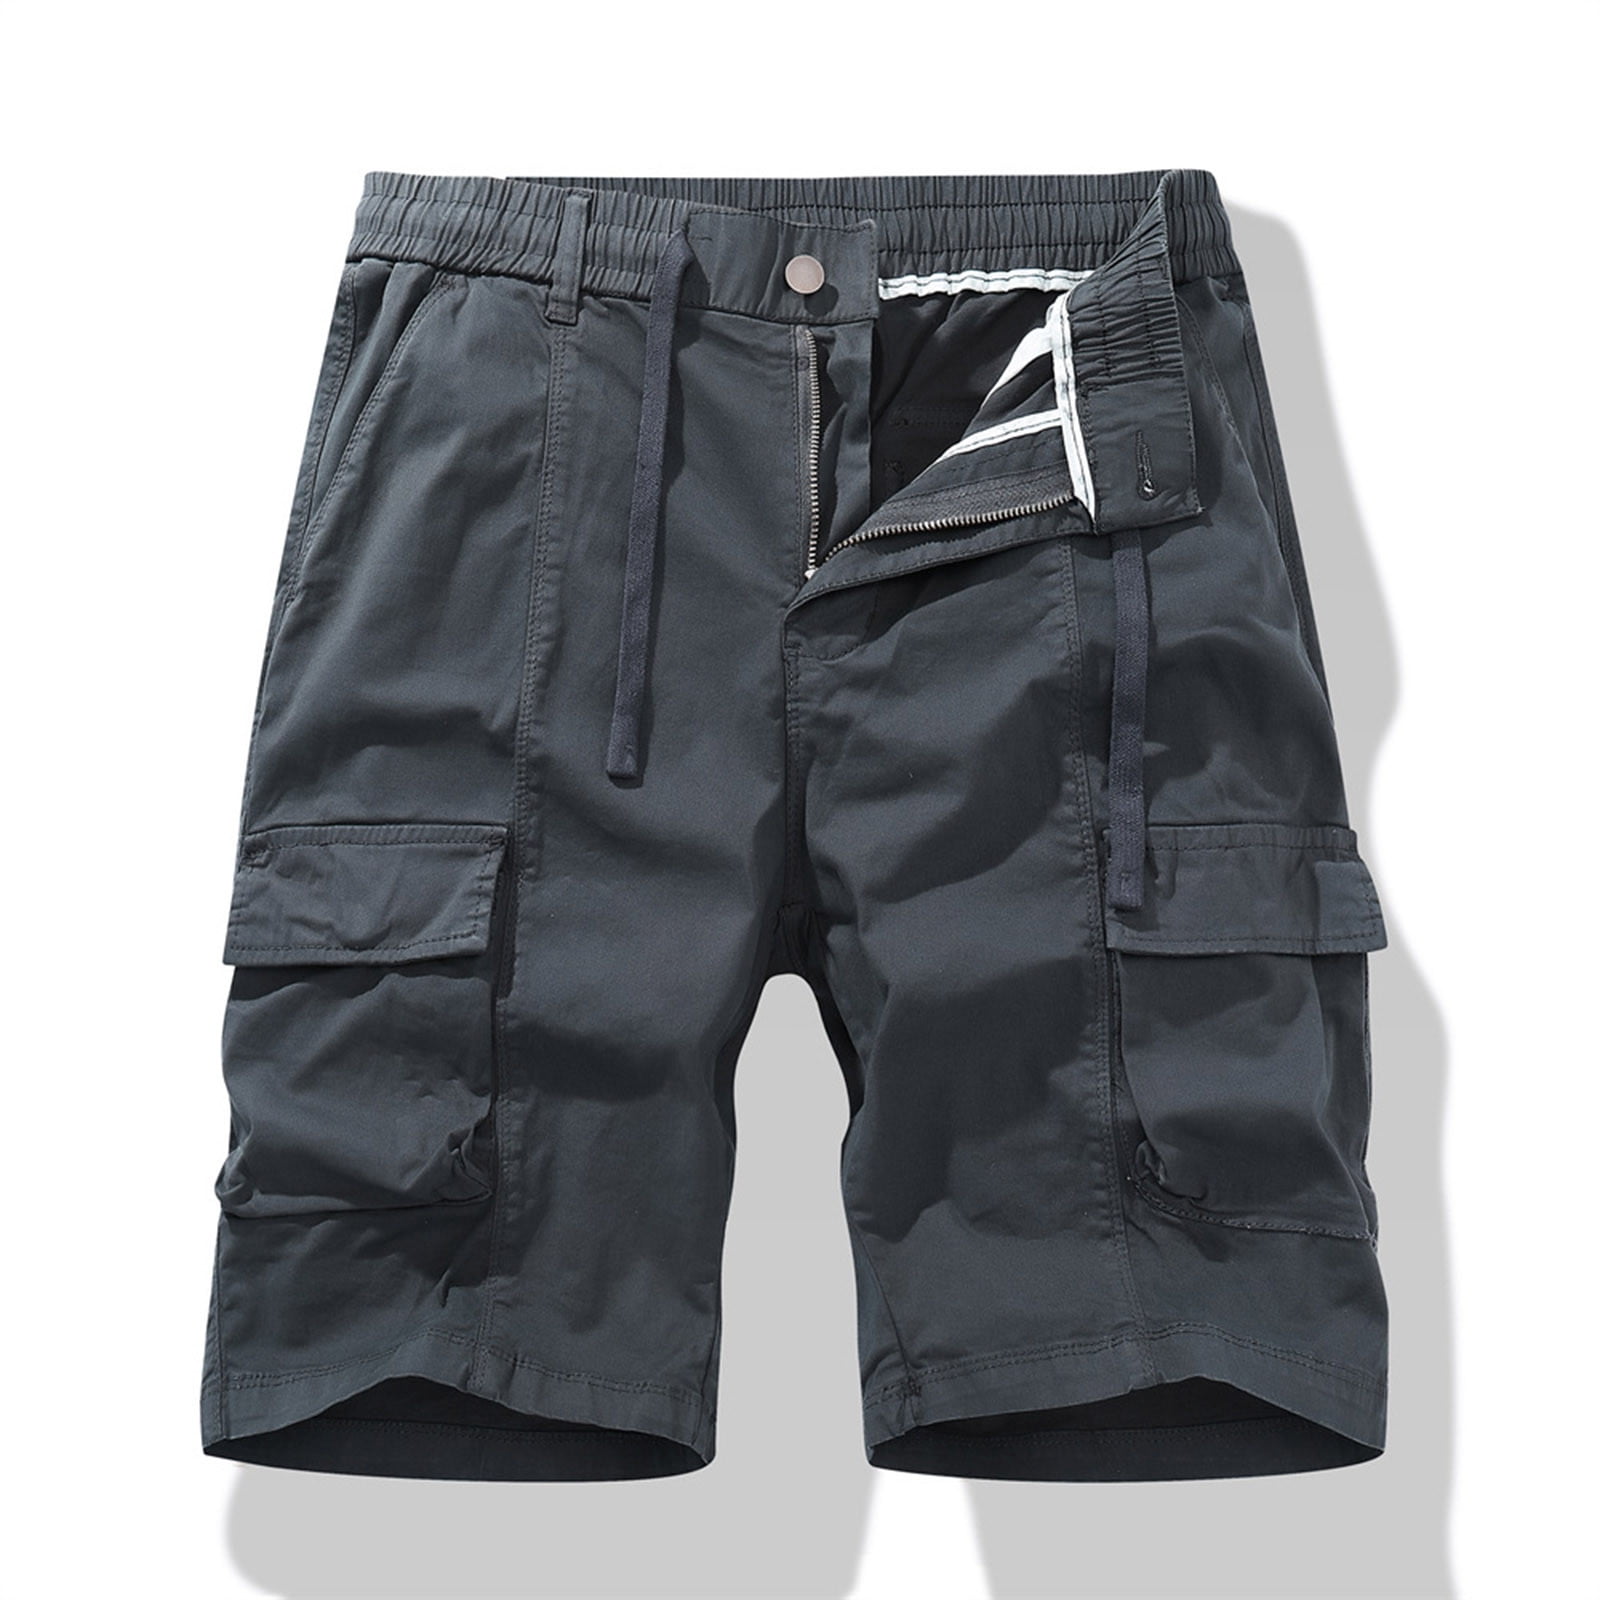 jsaierl Mens Cargo Shorts Plus Size Multi Pockets Shorts Outdoor ...